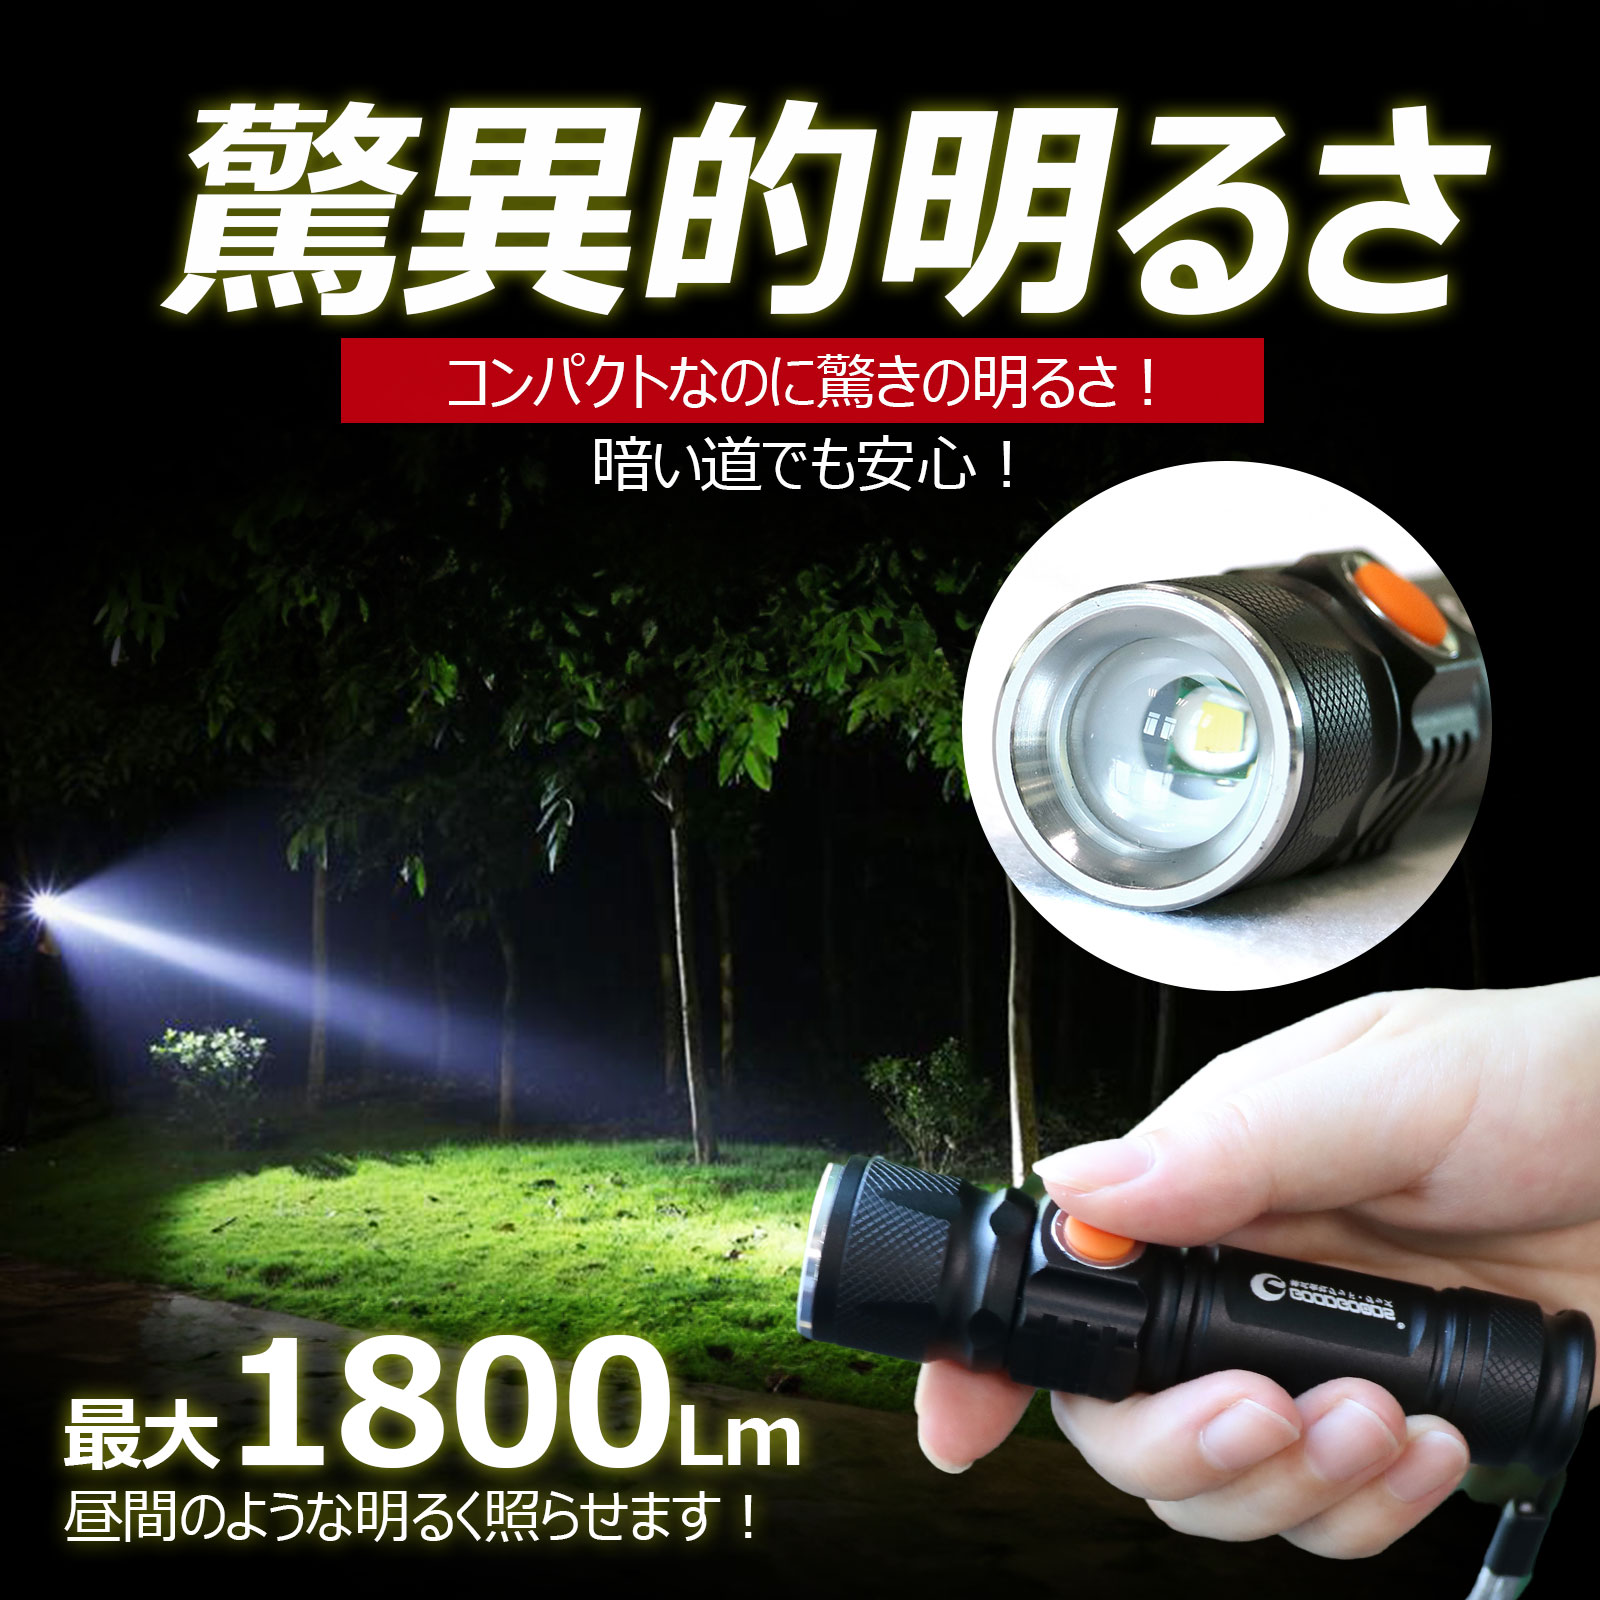 LEDライト 懐中電灯 強力 1800lm 充電式 ズーム機能付き